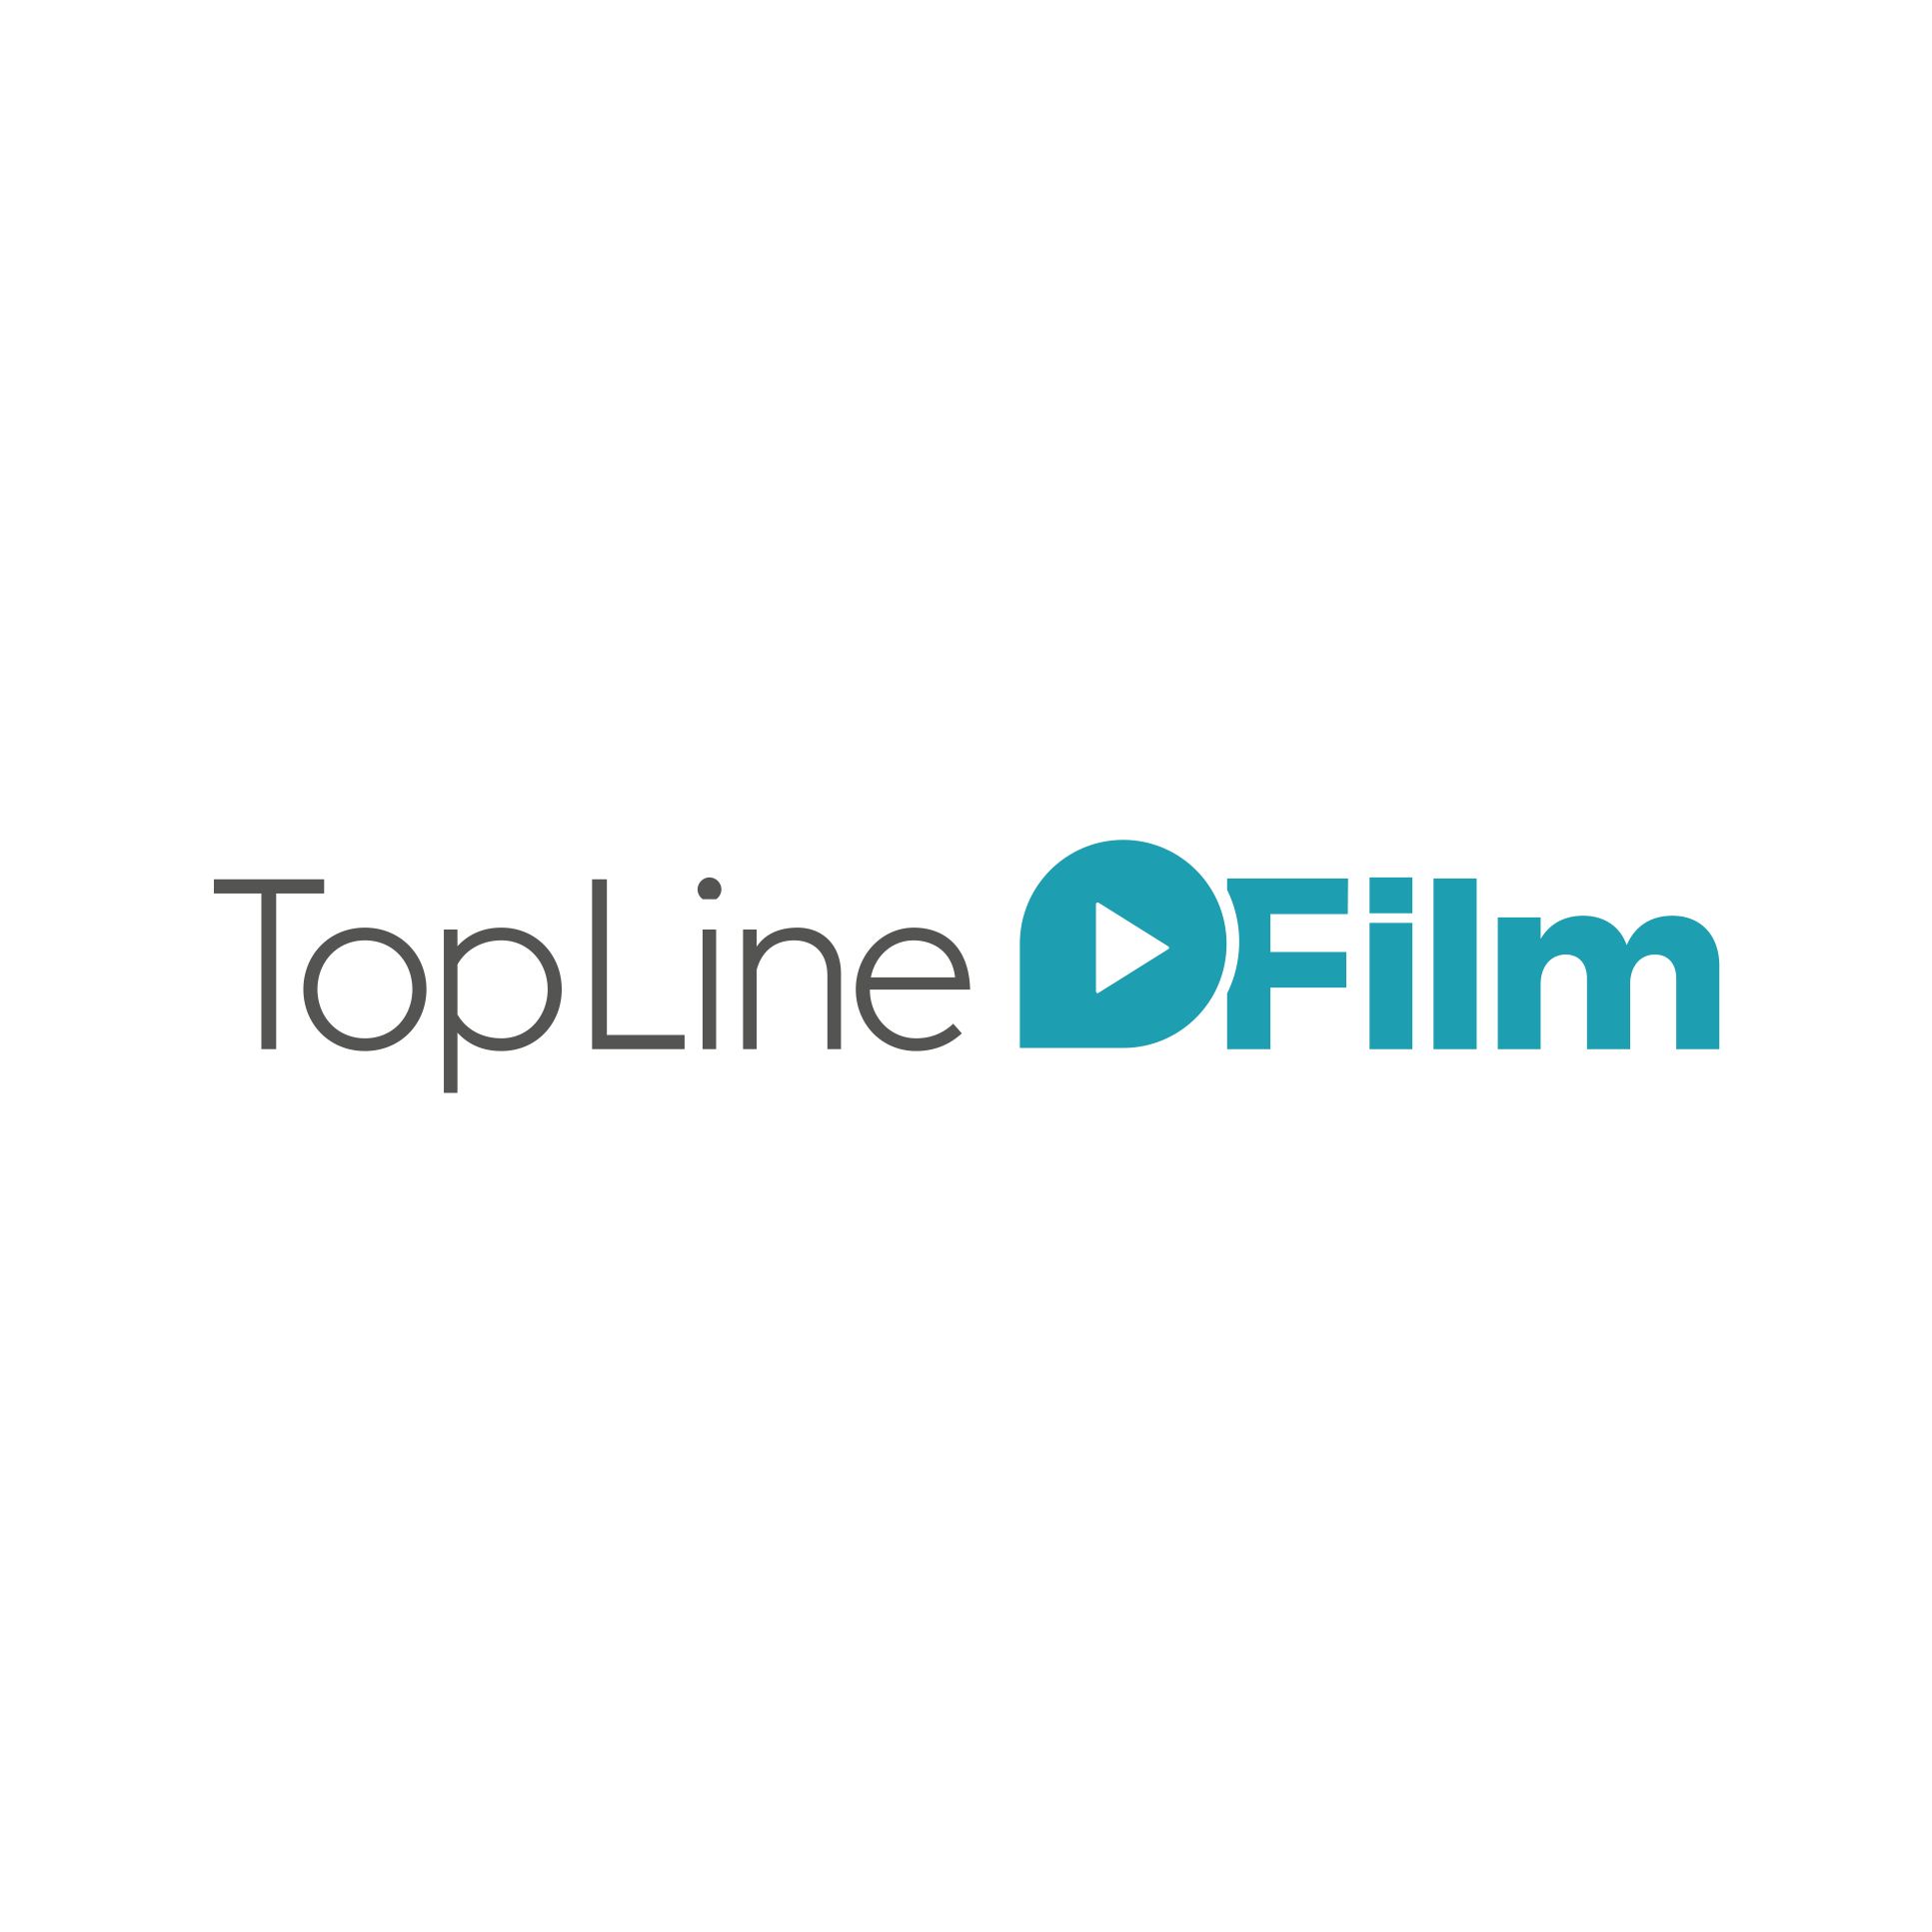 TopLine Film logo